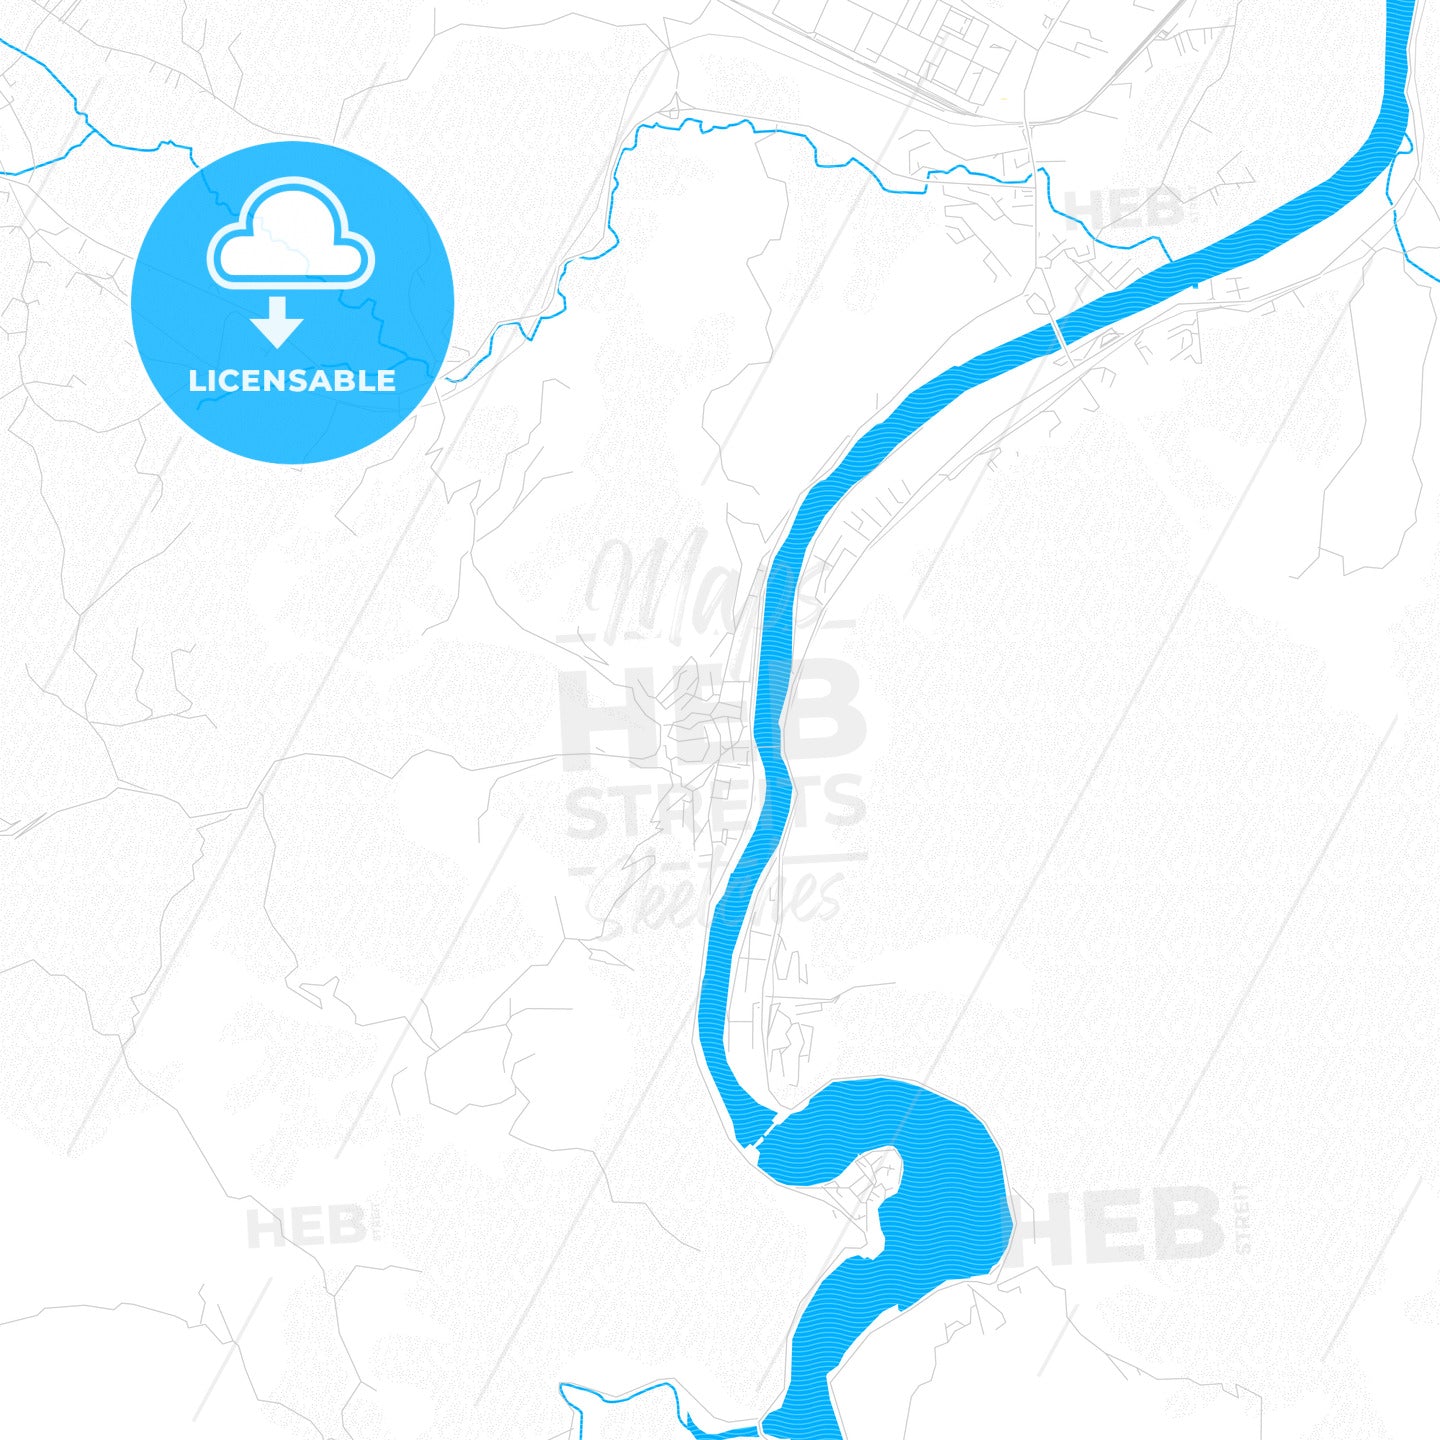 Zvornik, Bosnia and Herzegovina PDF vector map with water in focus